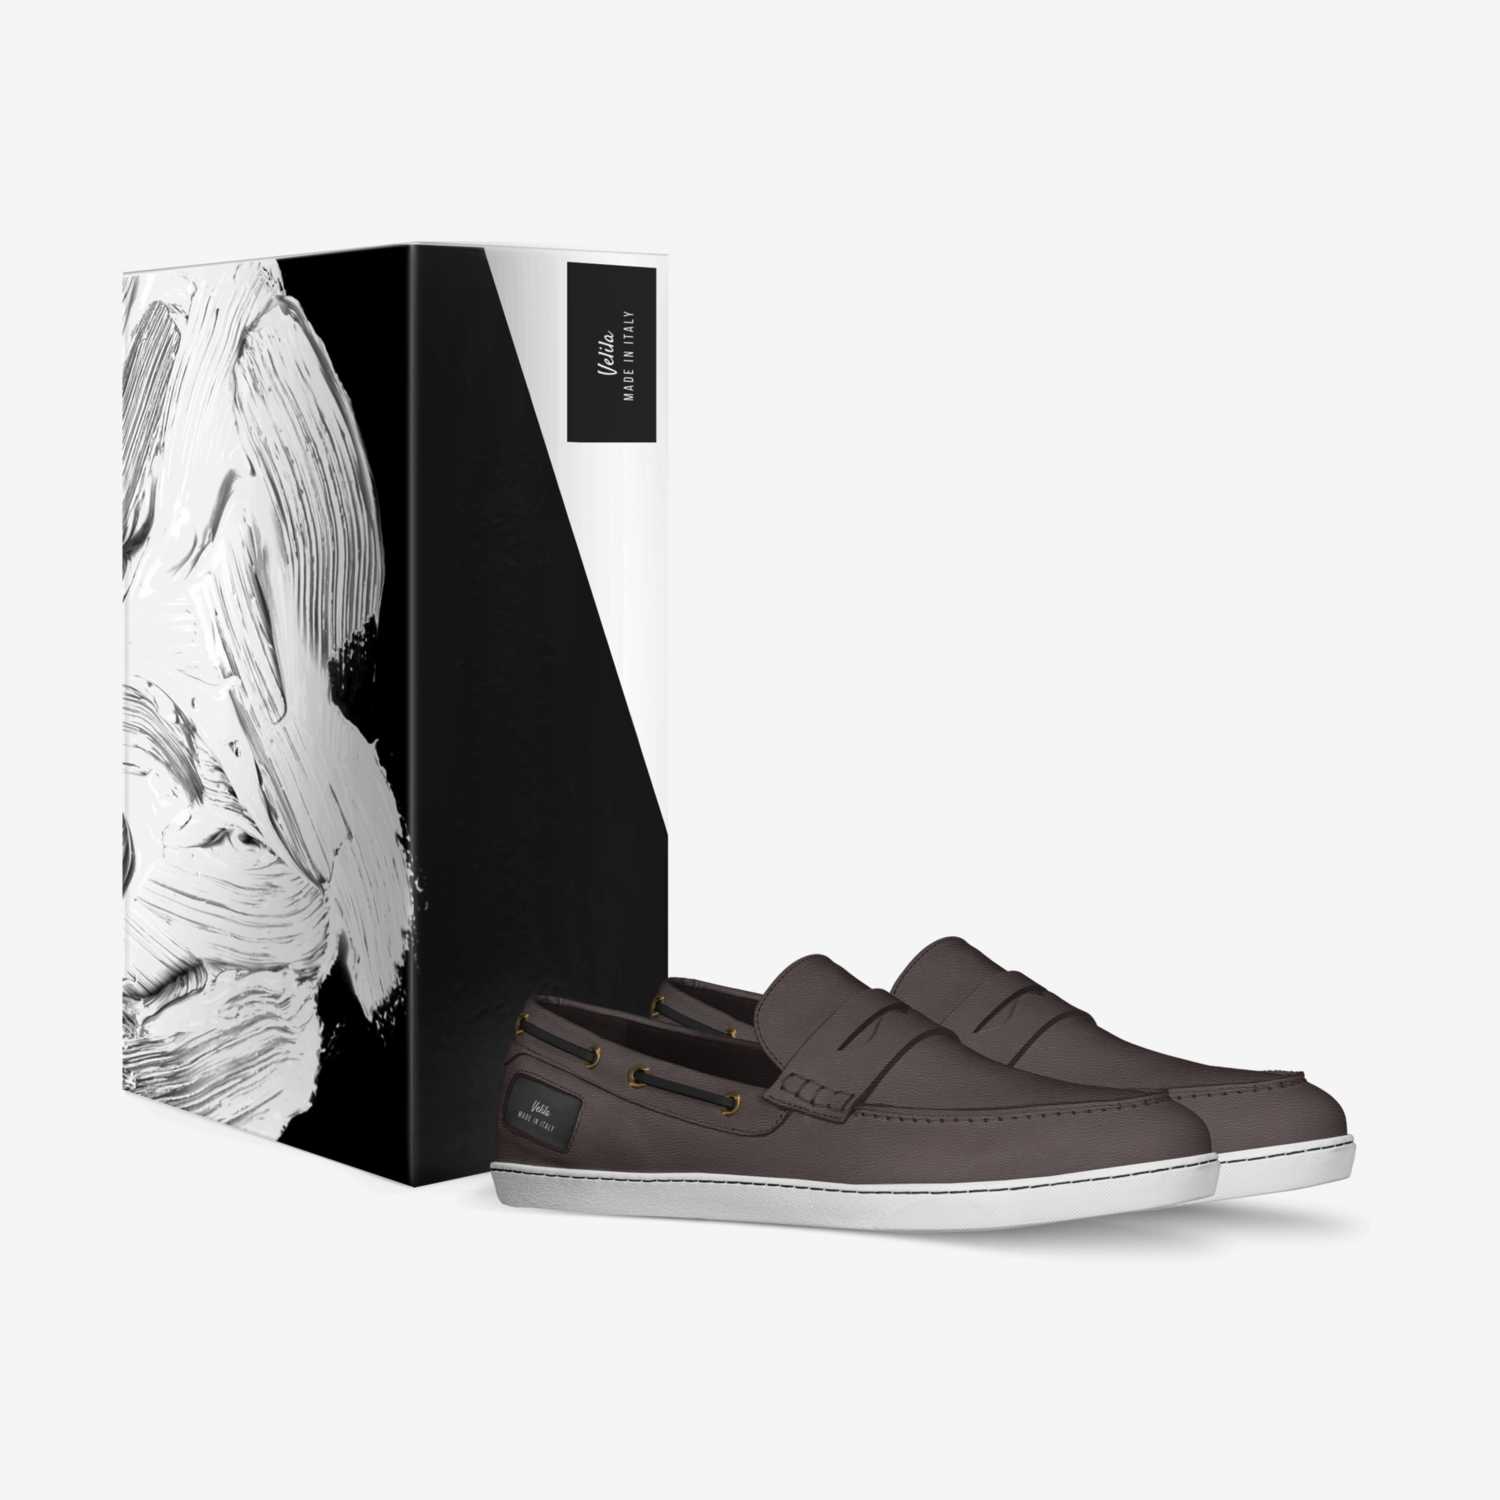 Velila custom made in Italy shoes by Josue Emilio Tavarez Santos | Box view